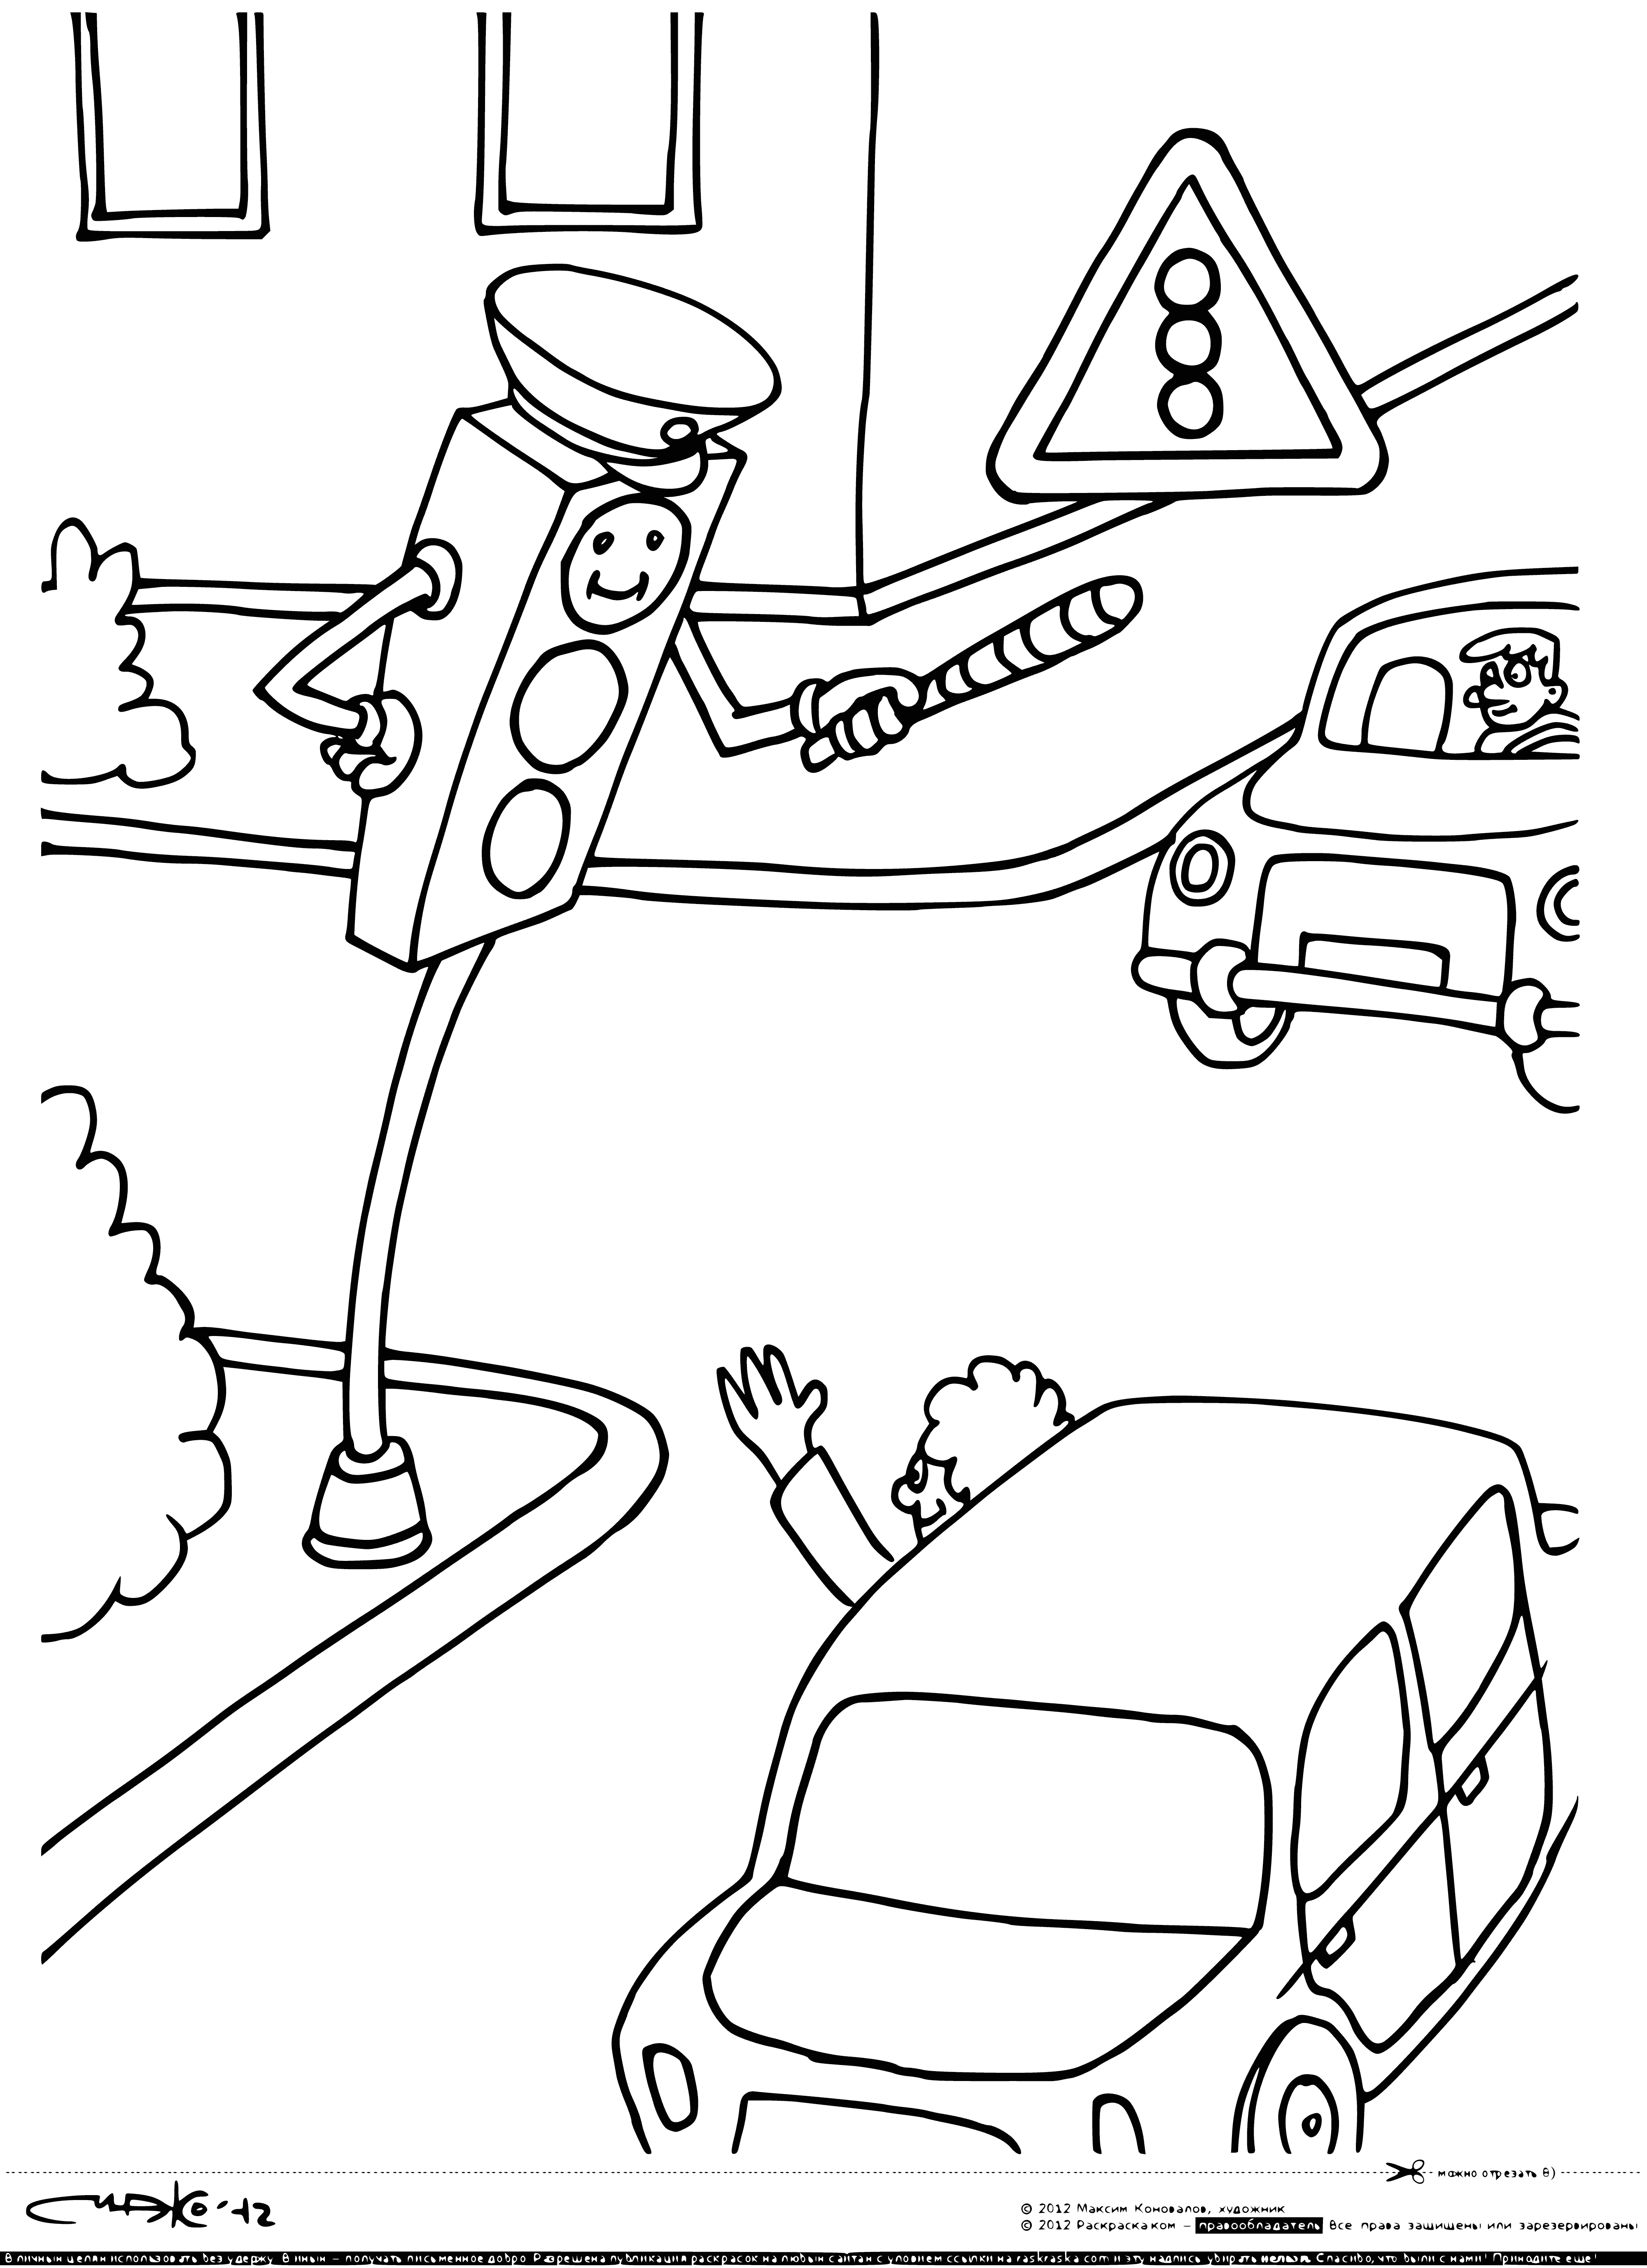 Traffic light regulation coloring page